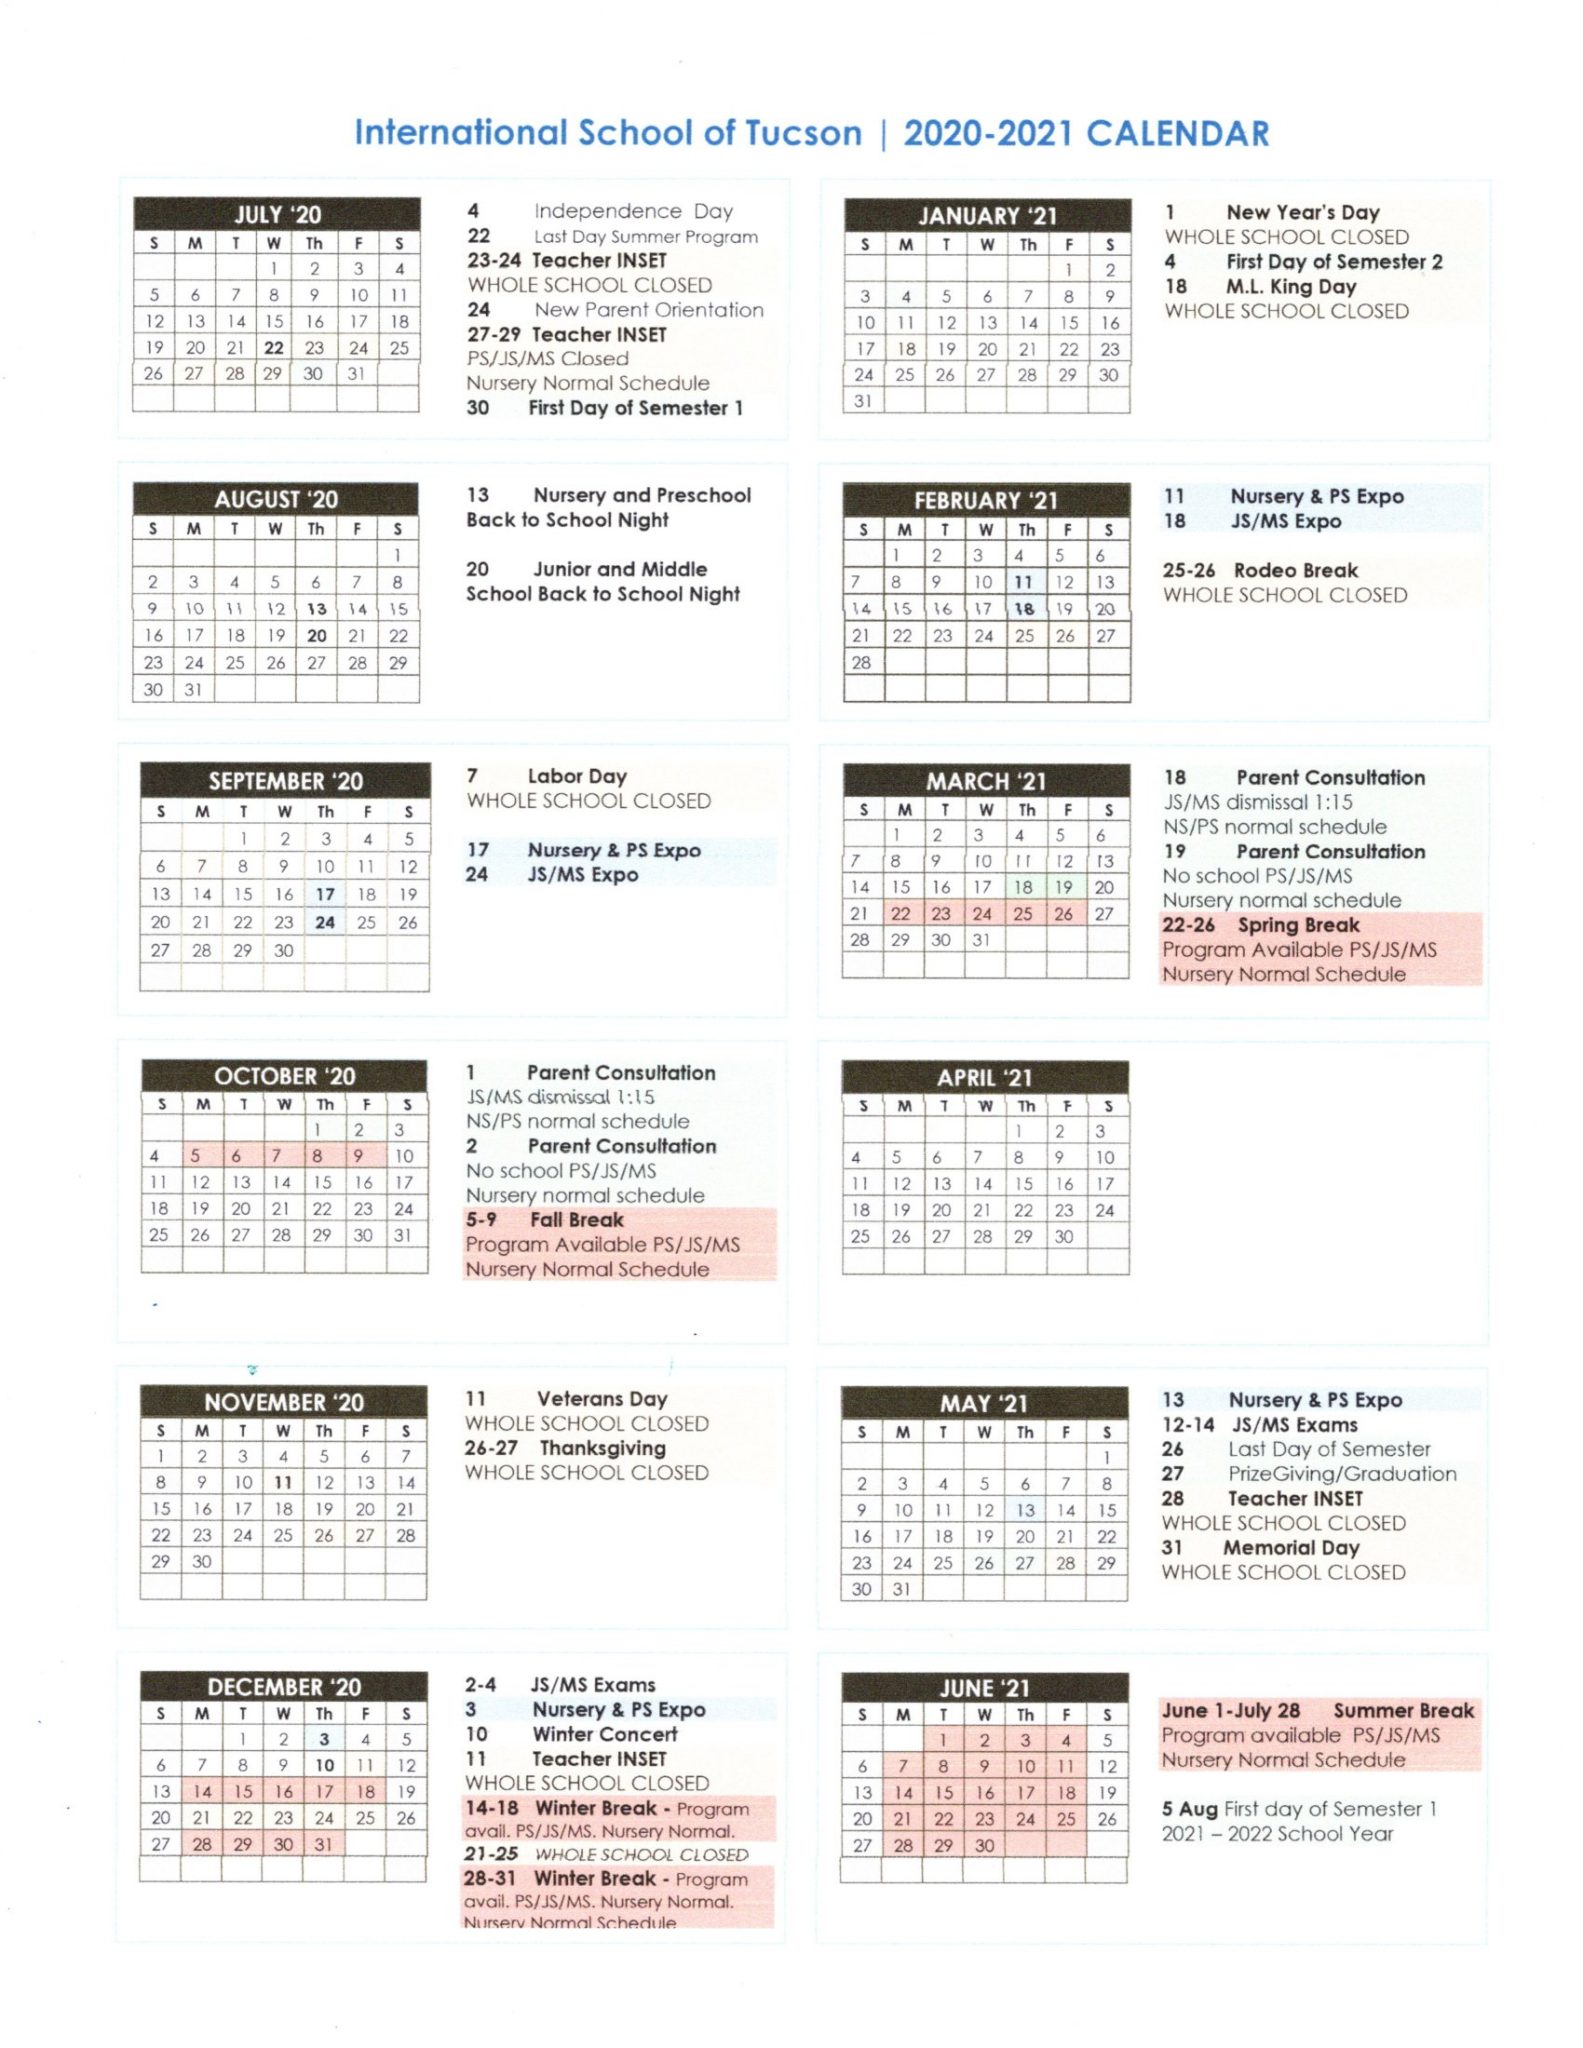 School Calendar International school of Tucson